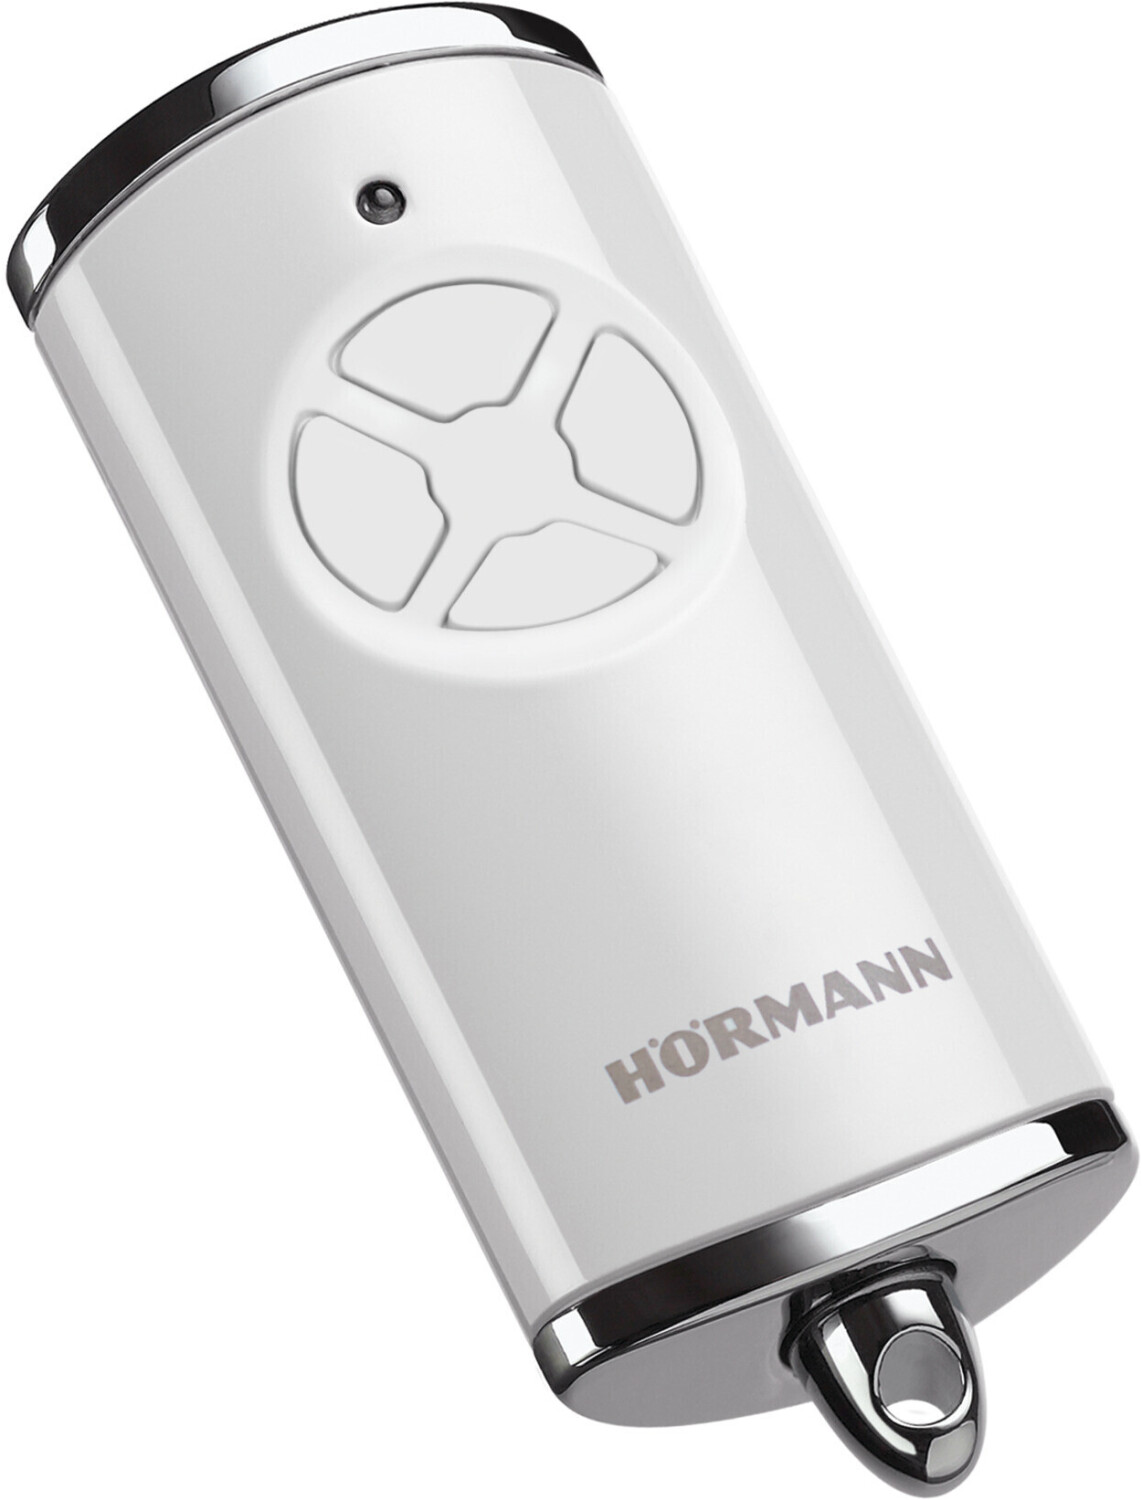 Hoermann Hörmann Handsender HSE 4, BiSecur, silber